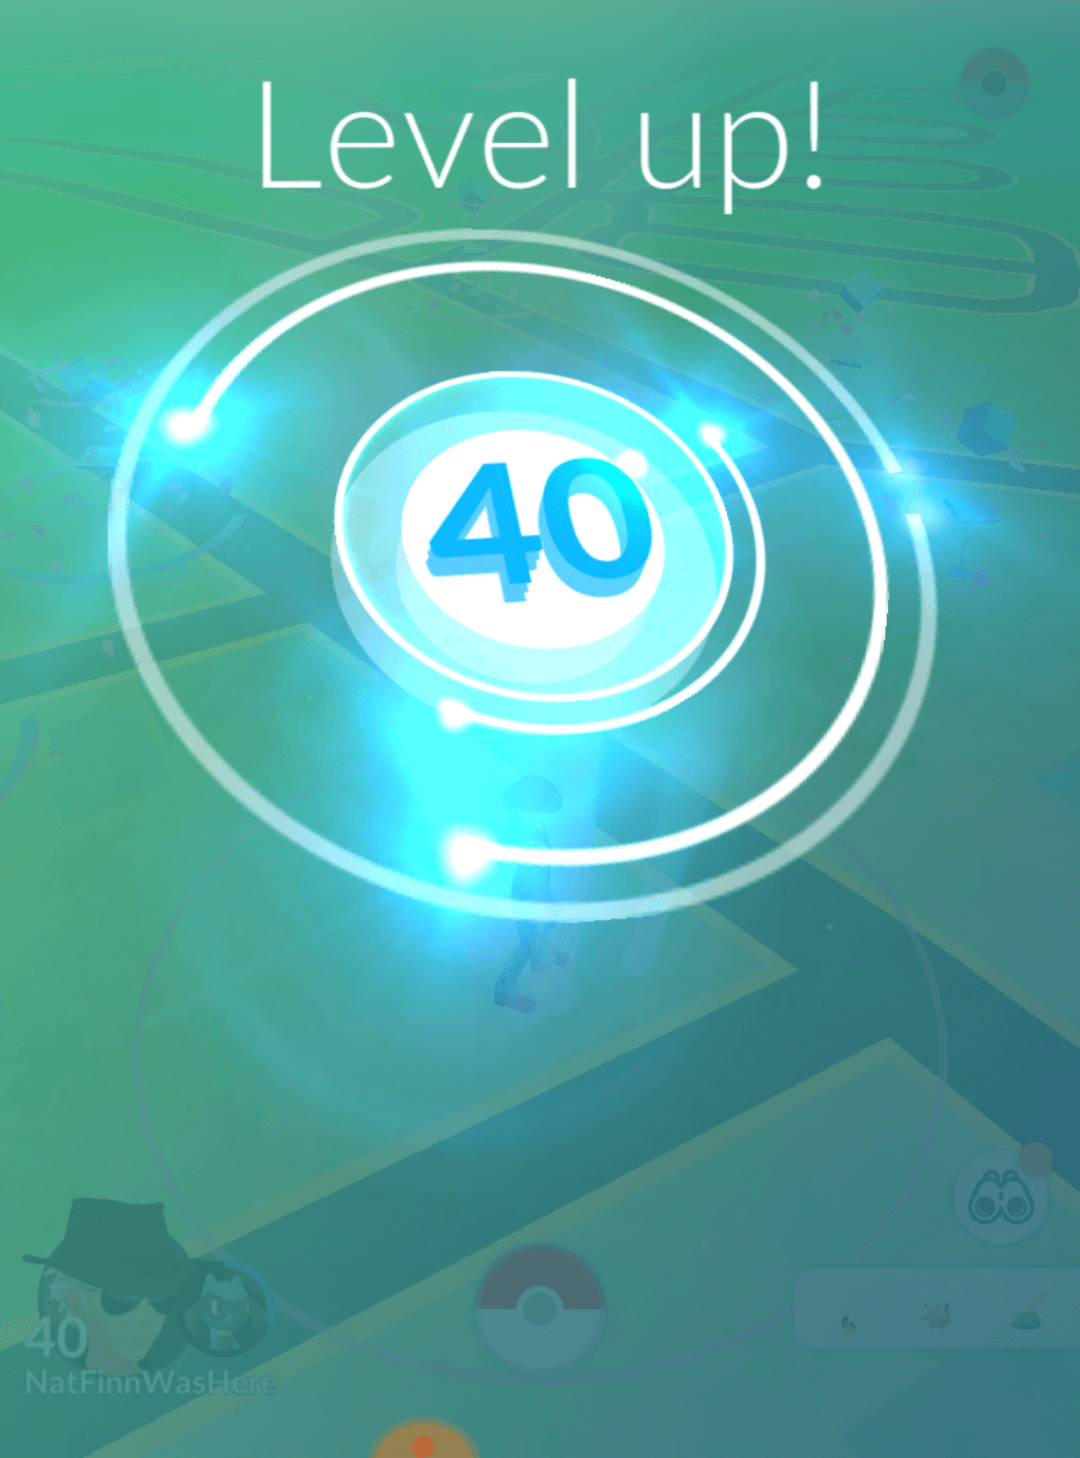 Pokémon Go Account Level 40